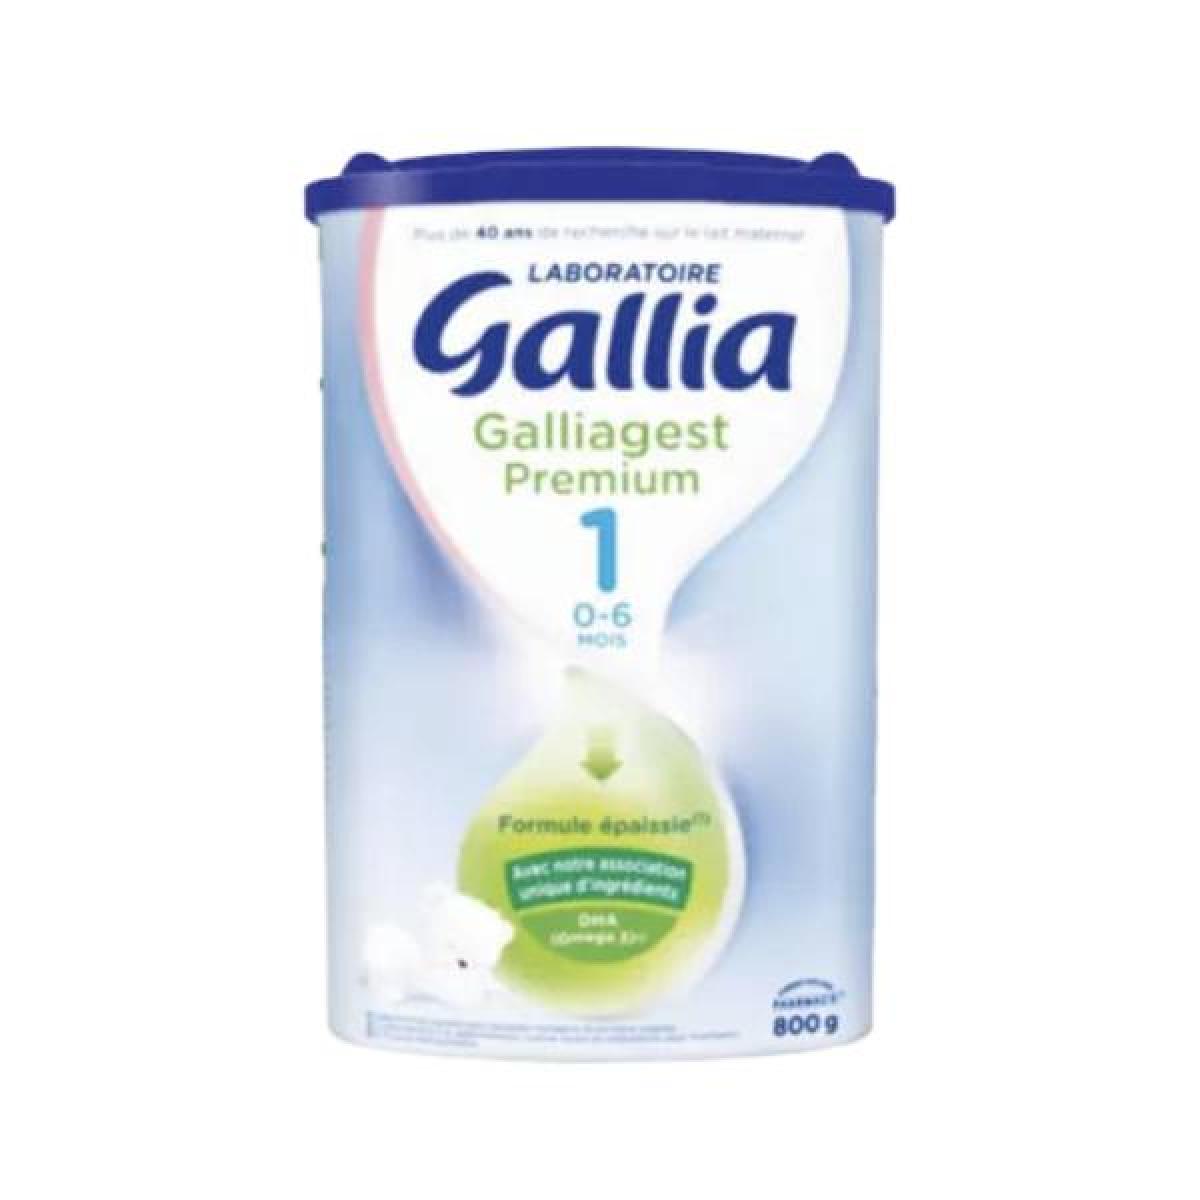 Gallia Galliagest Premium 1er âge - 800g - Pharmacie en ligne